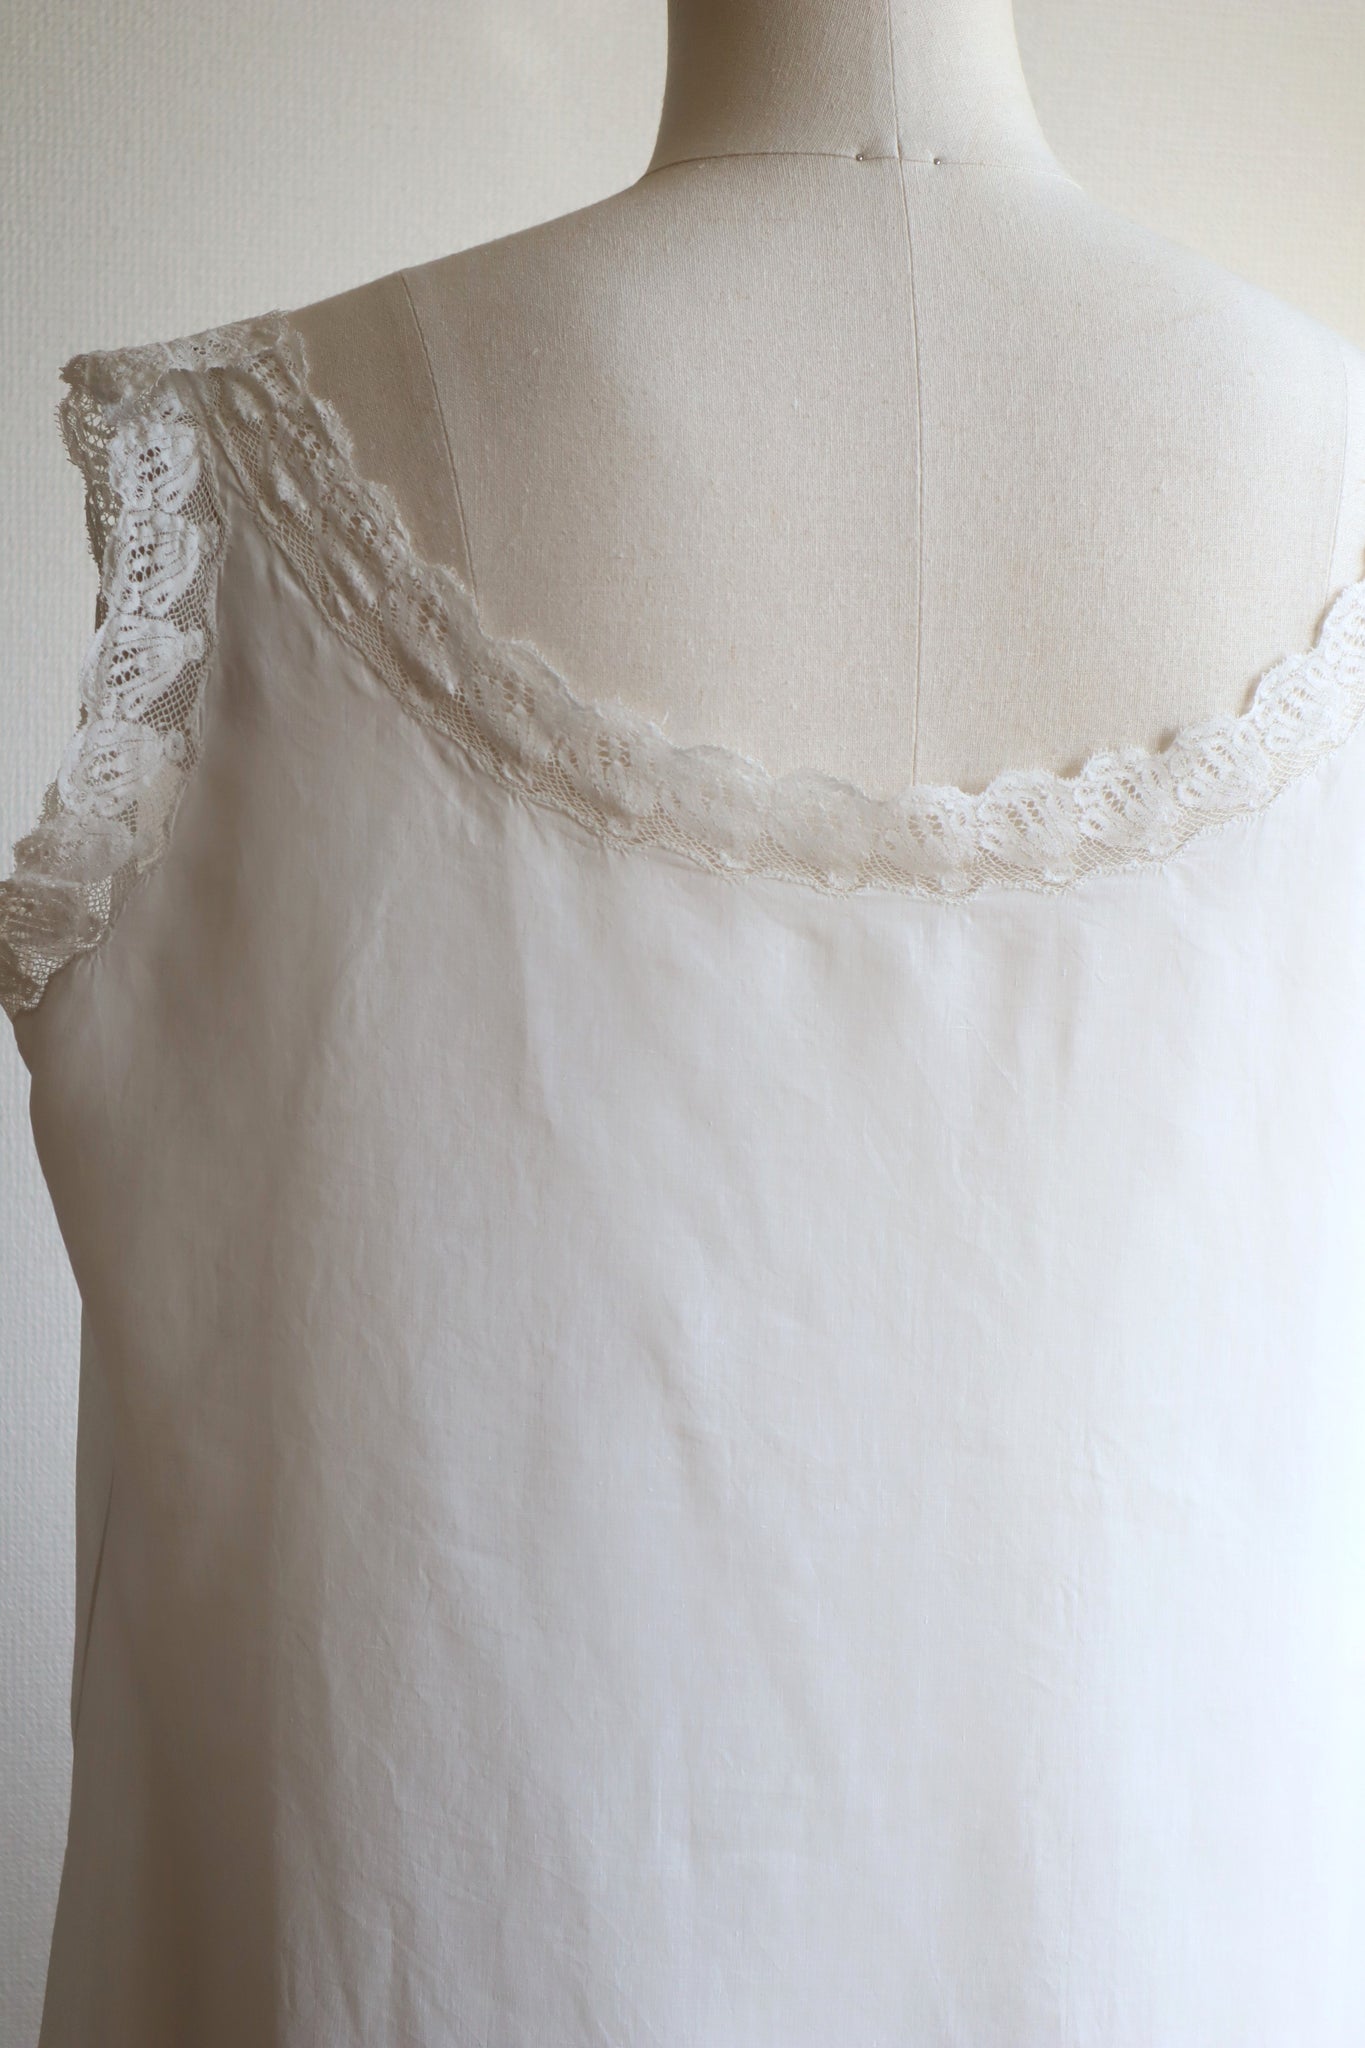 1900s Crown Monogram Sleeveless Dress